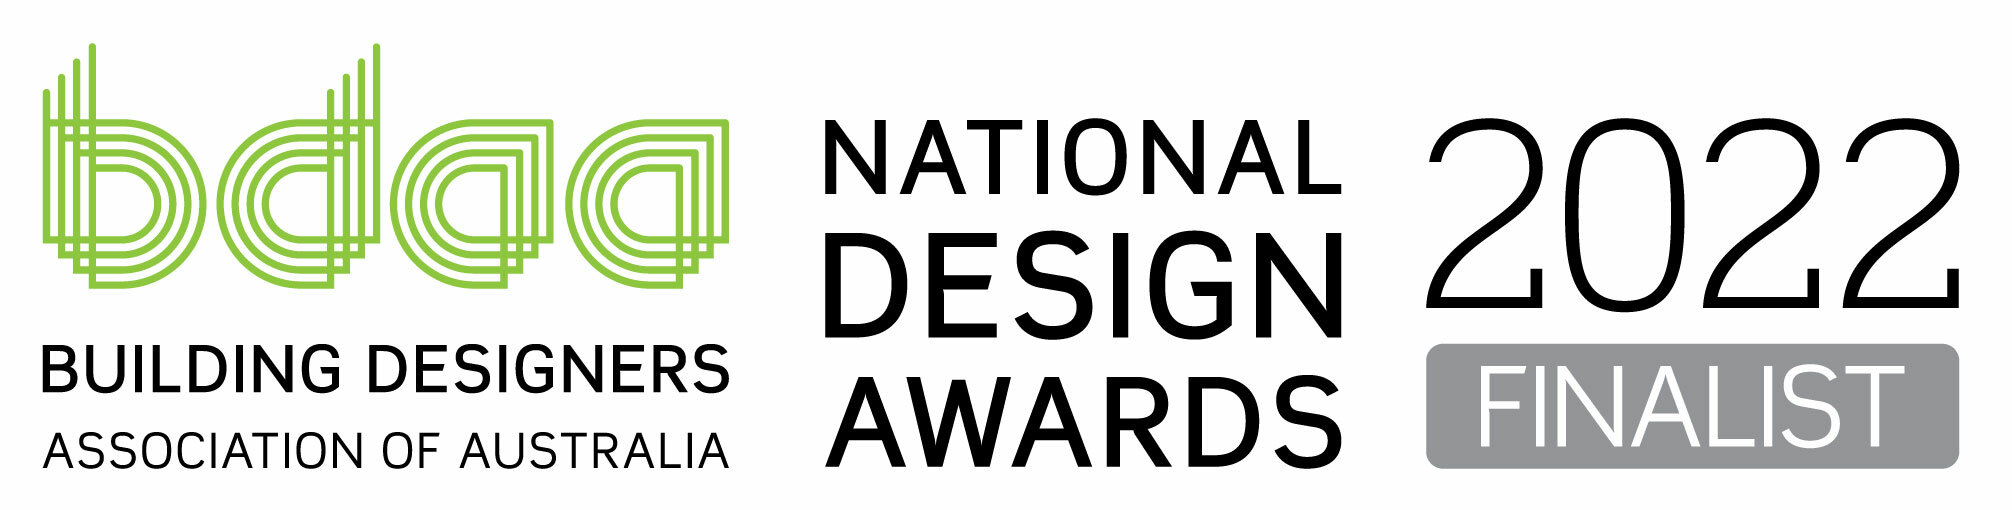 BDAA-National-Design-Awards-2022-logo-finalist-positive-CMYK